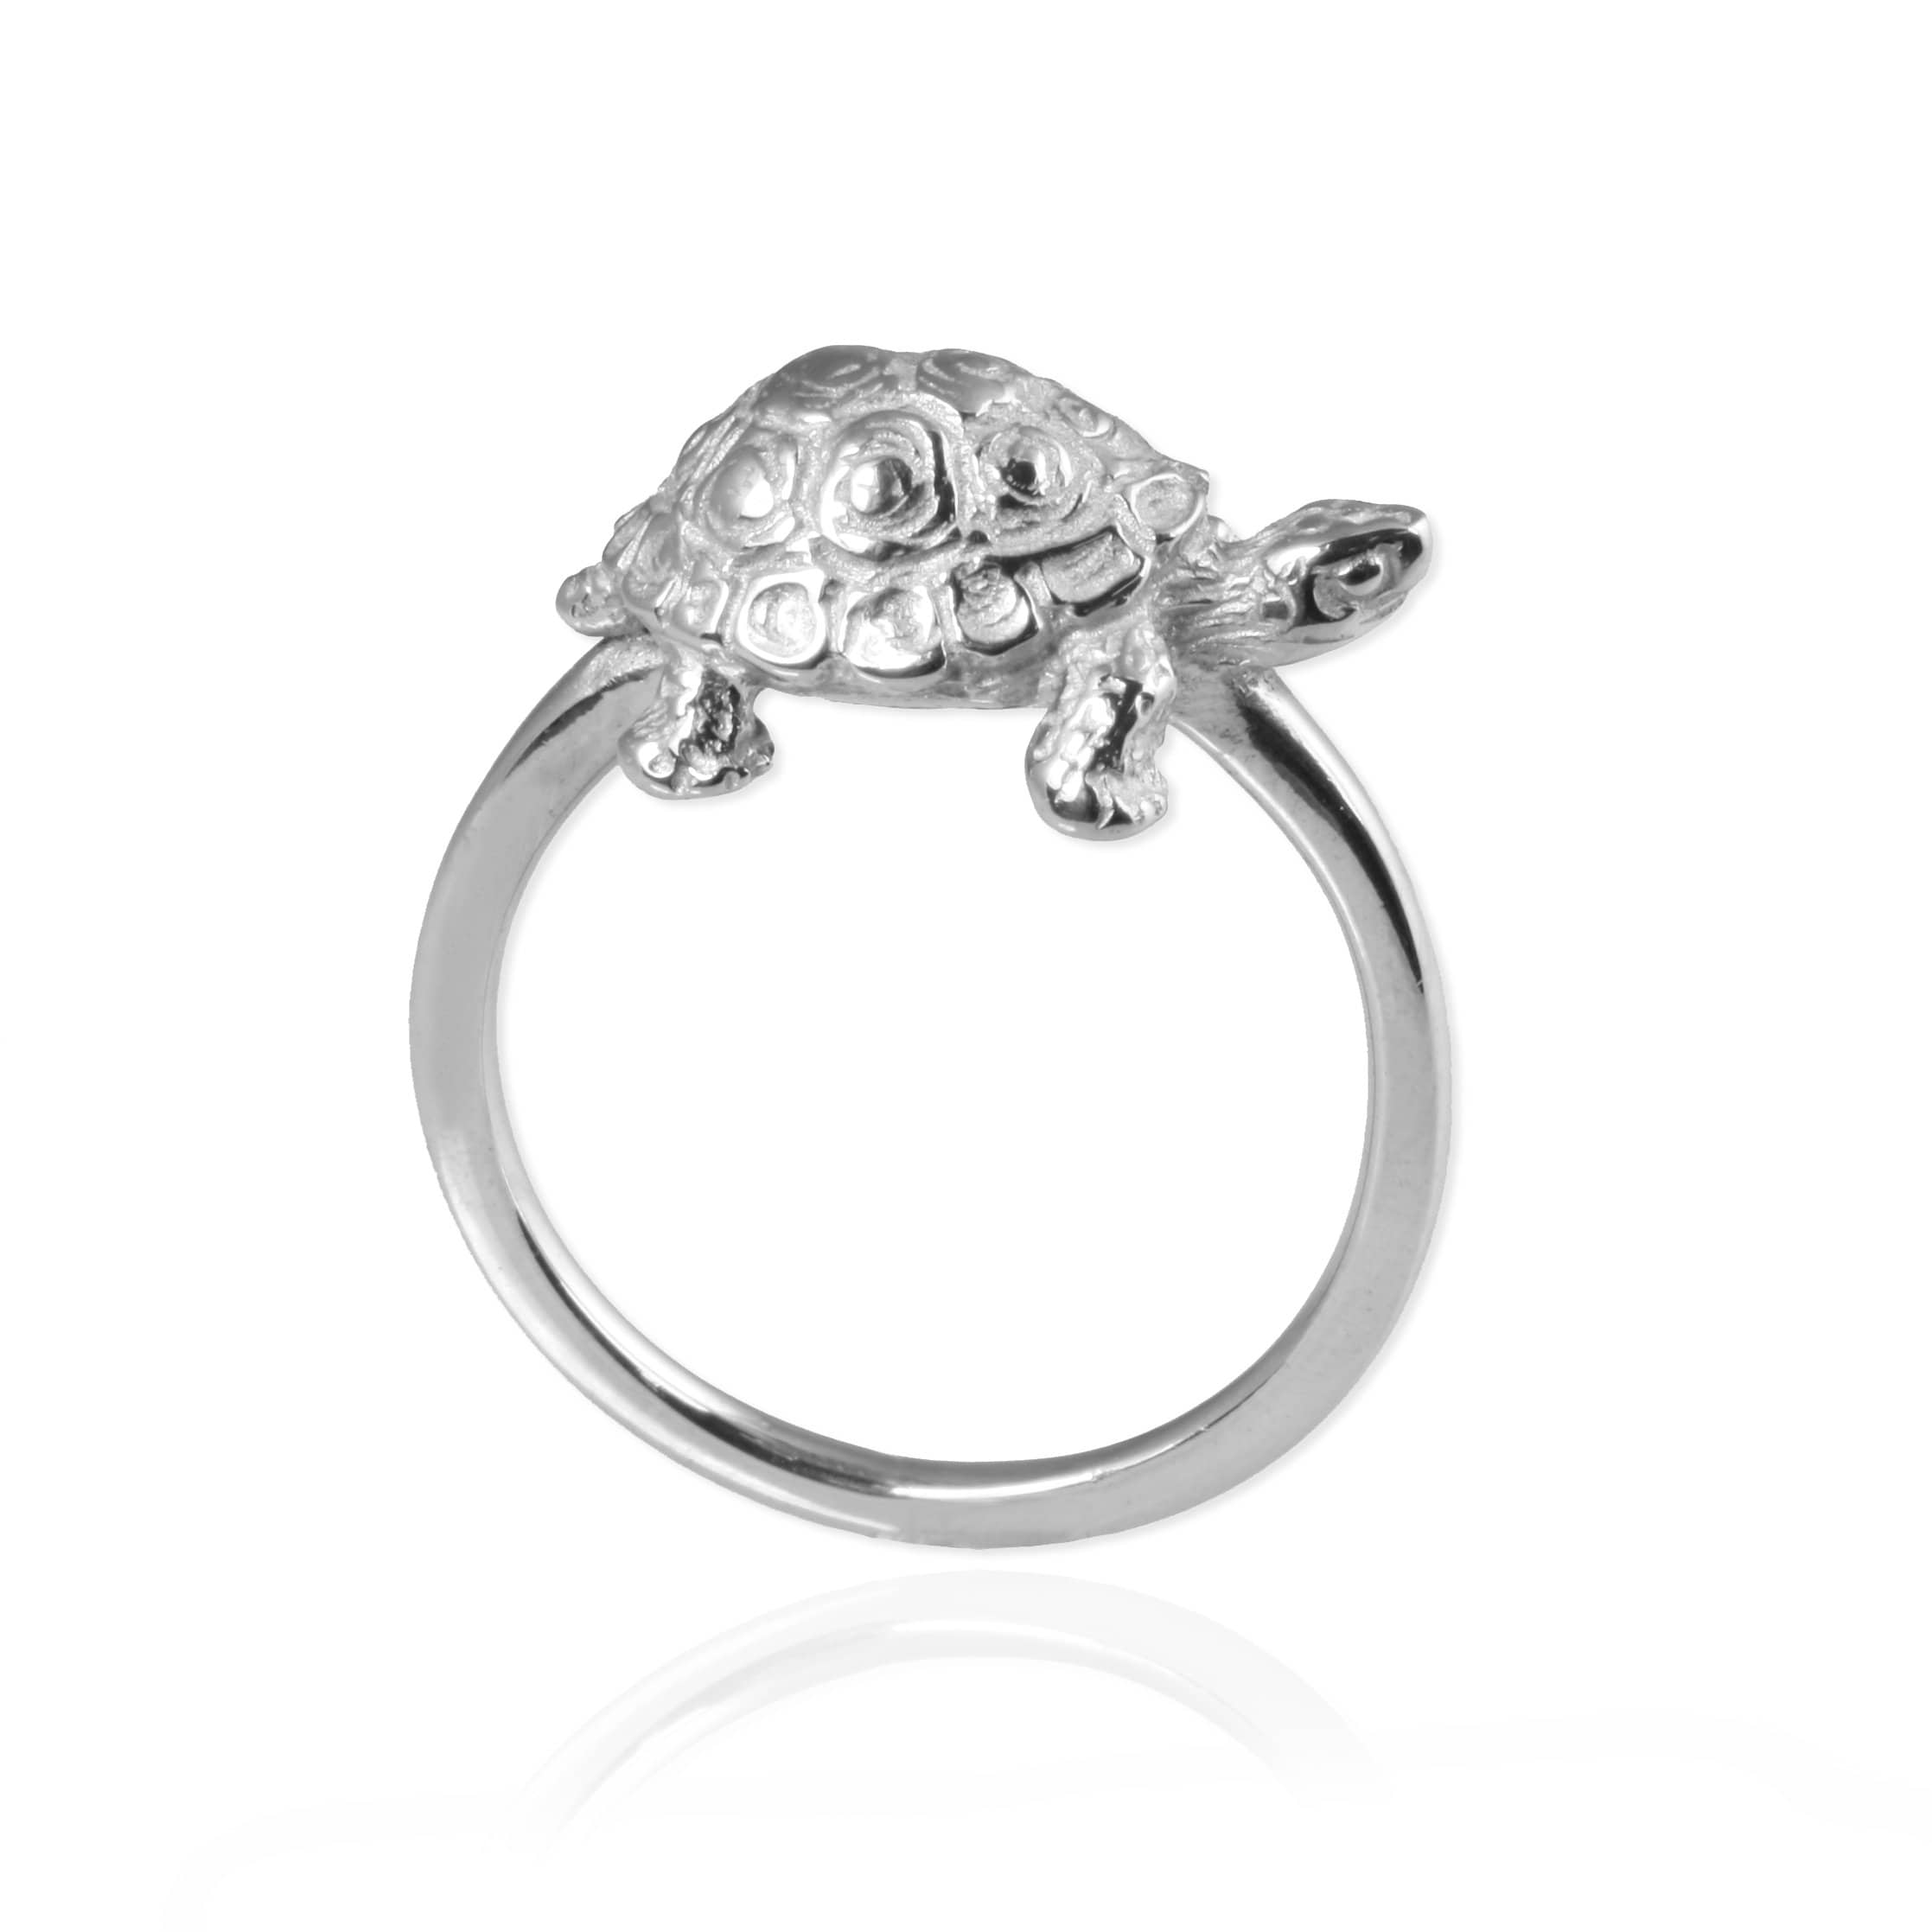 Buy manjari jewels Sterling Silver Micro Setting Green Stone Ladies  Tortoise Rings at Amazon.in